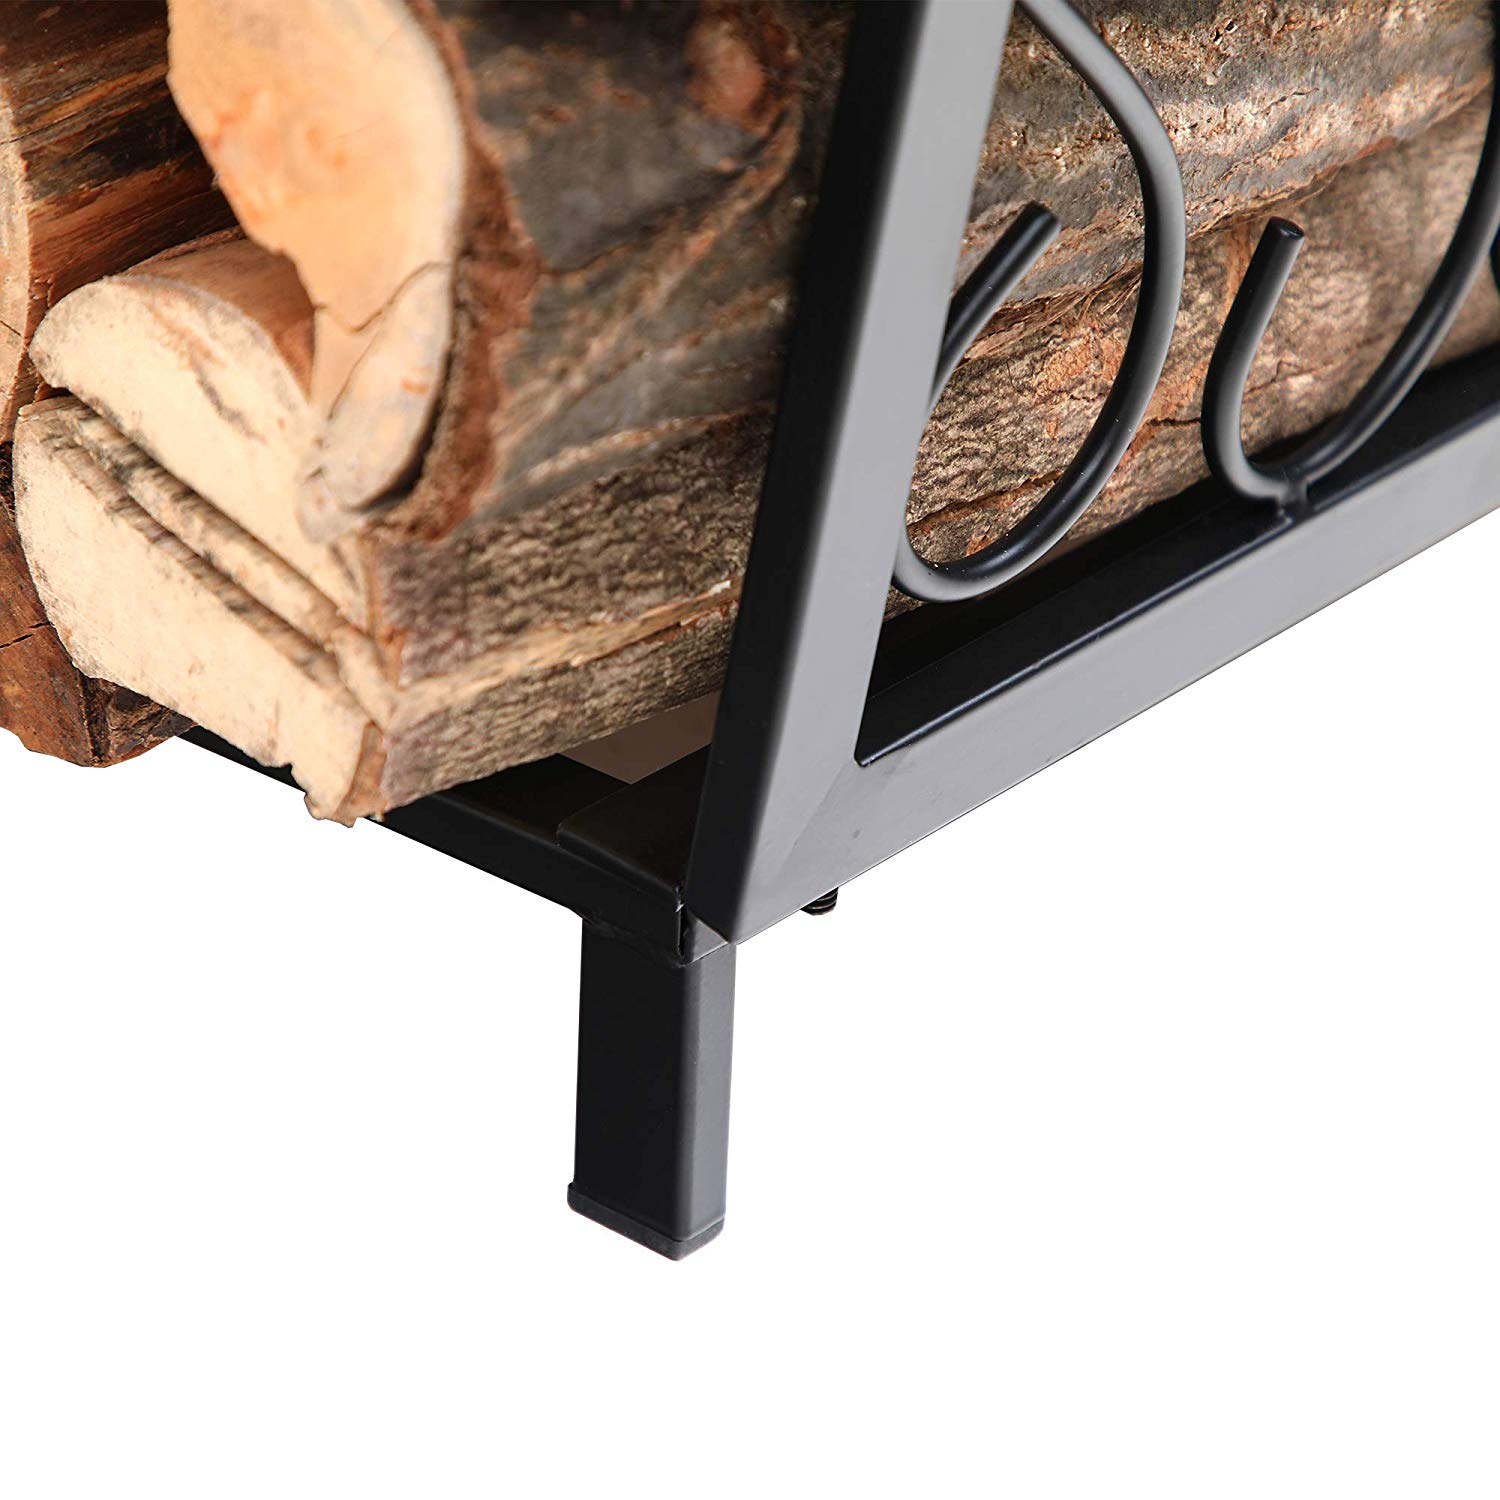 PHI VILLA 17 Inch Small Decorative Indoor/Outdoor Firewood Racks Steel Wood Storage Log Rack Holder